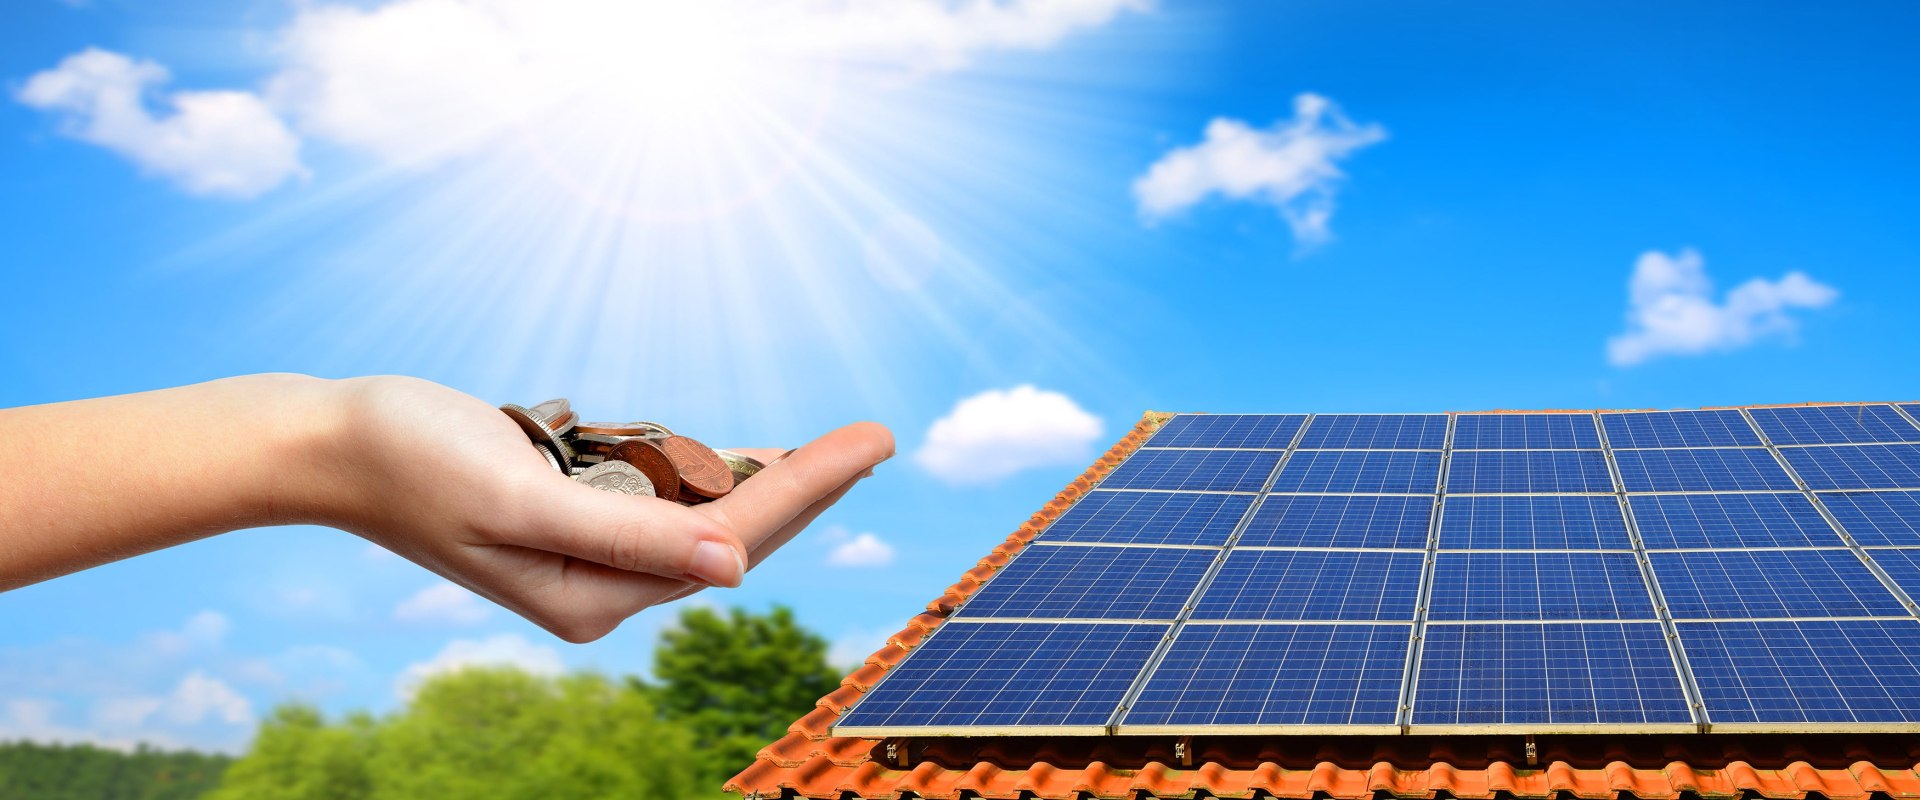 How solar energy benefits the environment?